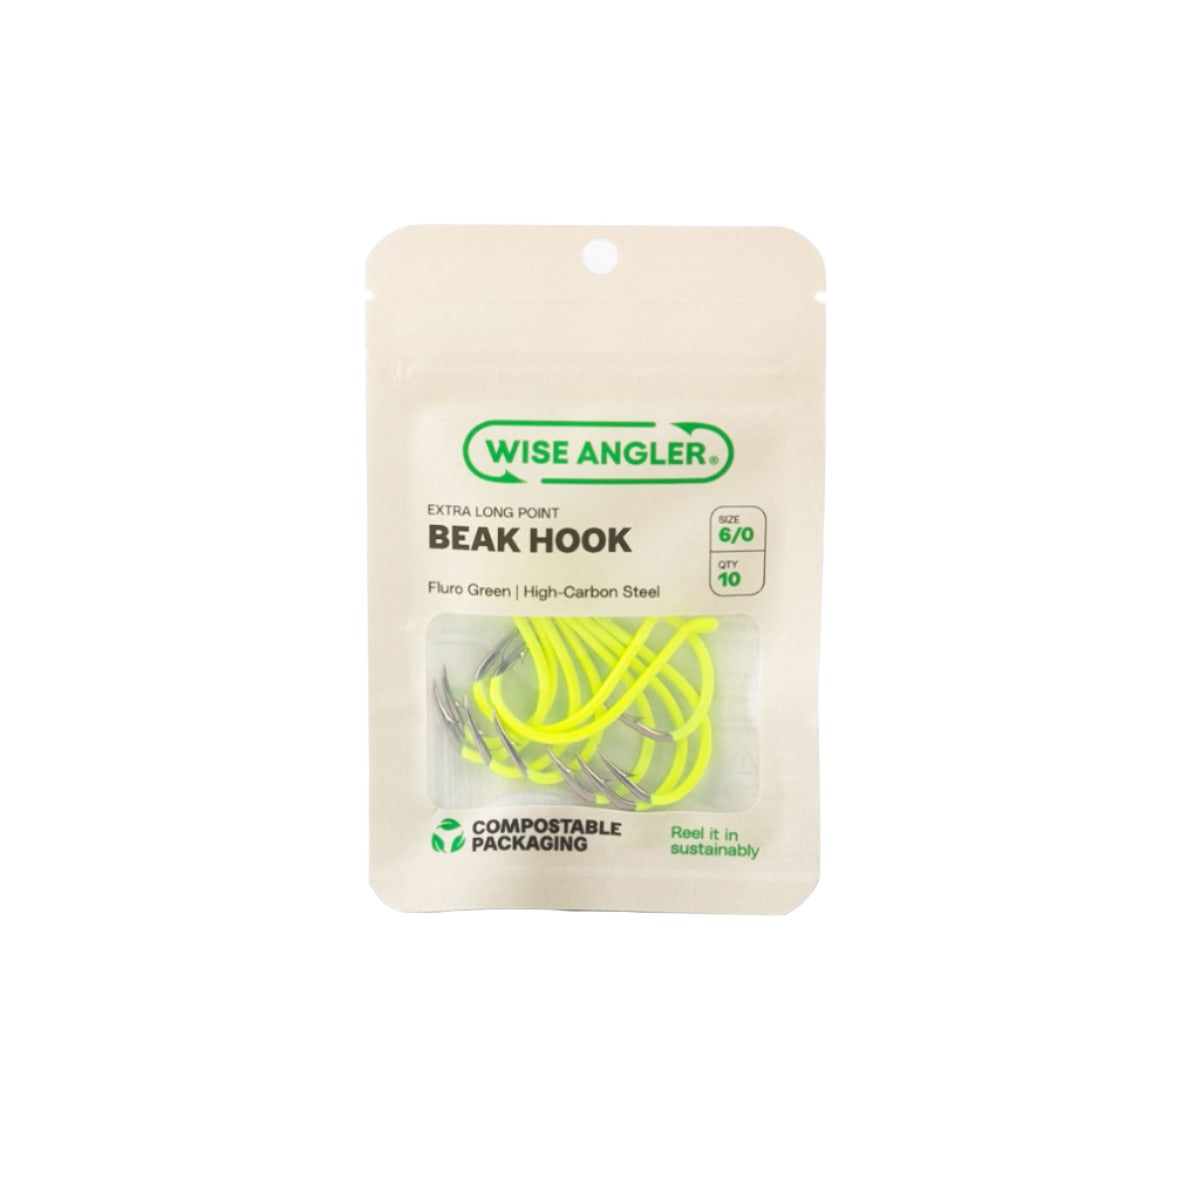 Beak Hook - Extra Long Point Fluro Green